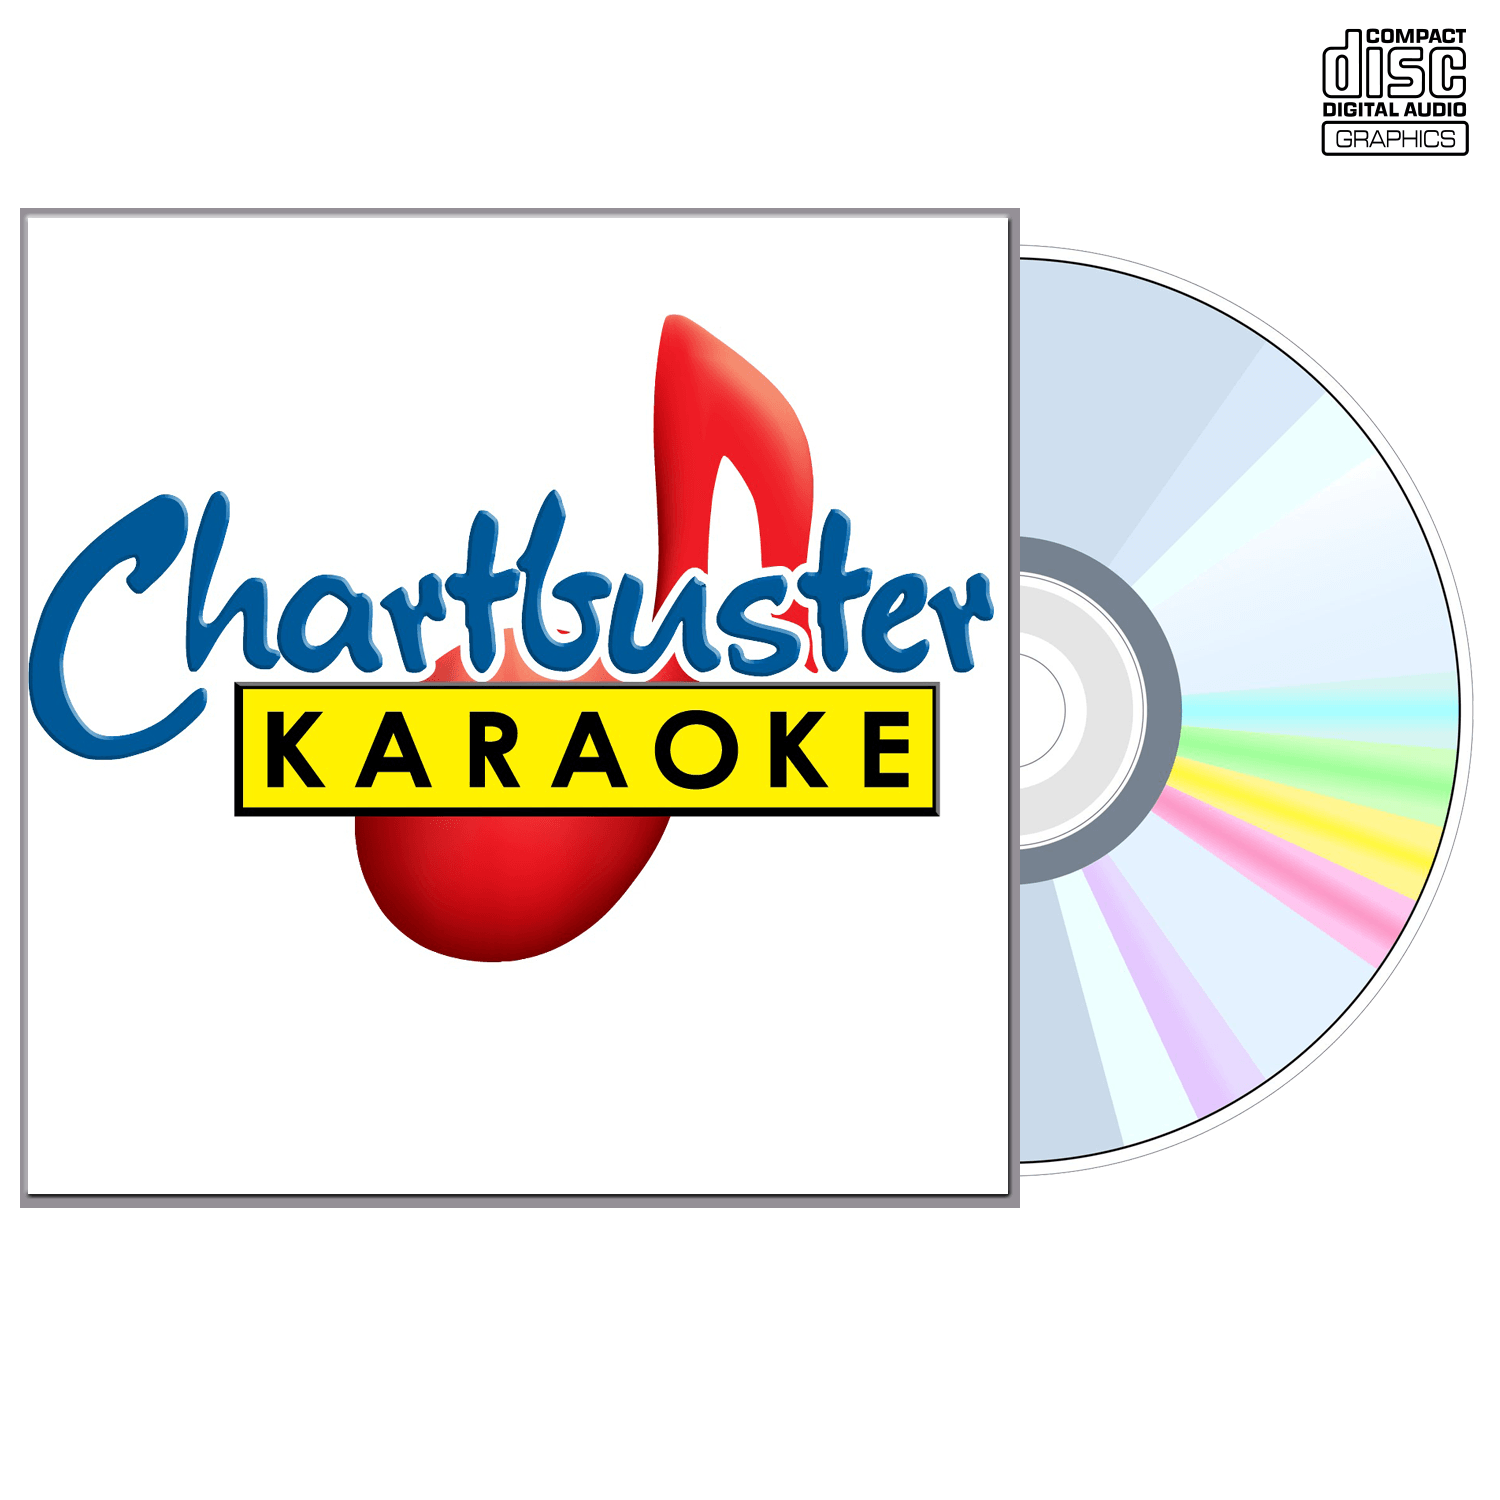 Patty Loveless Vol 2 - CD+G - Chartbuster Karaoke - Karaoke Home Entertainment